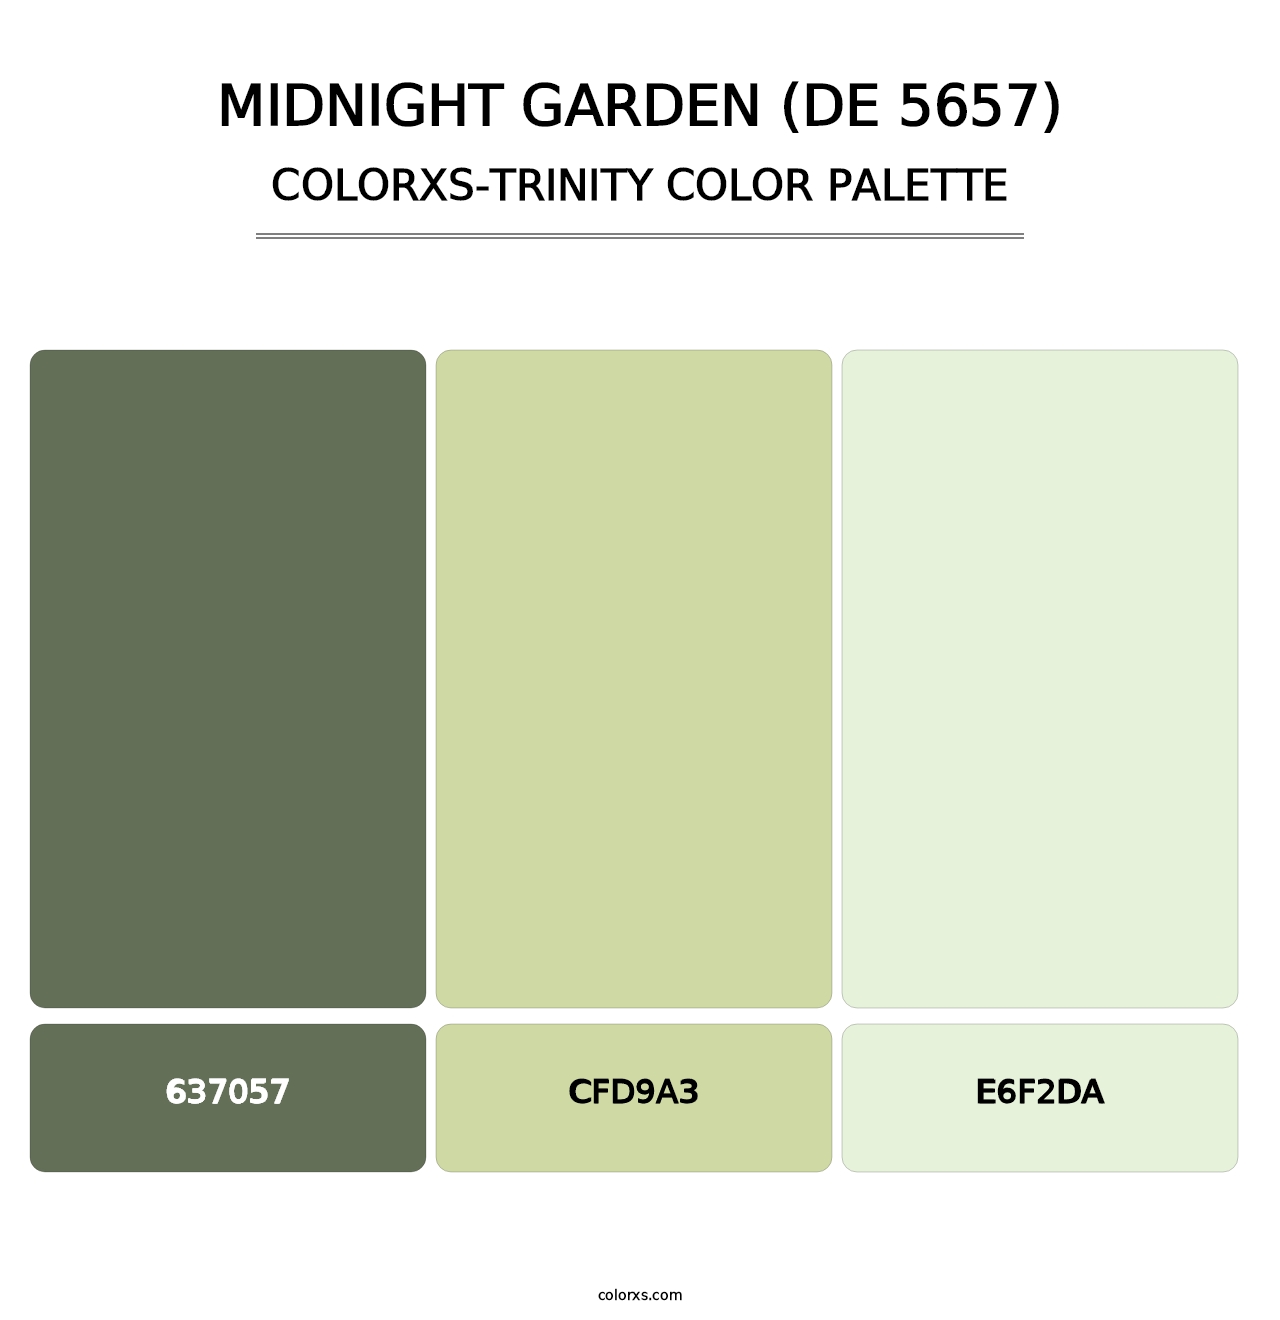 Midnight Garden (DE 5657) - Colorxs Trinity Palette